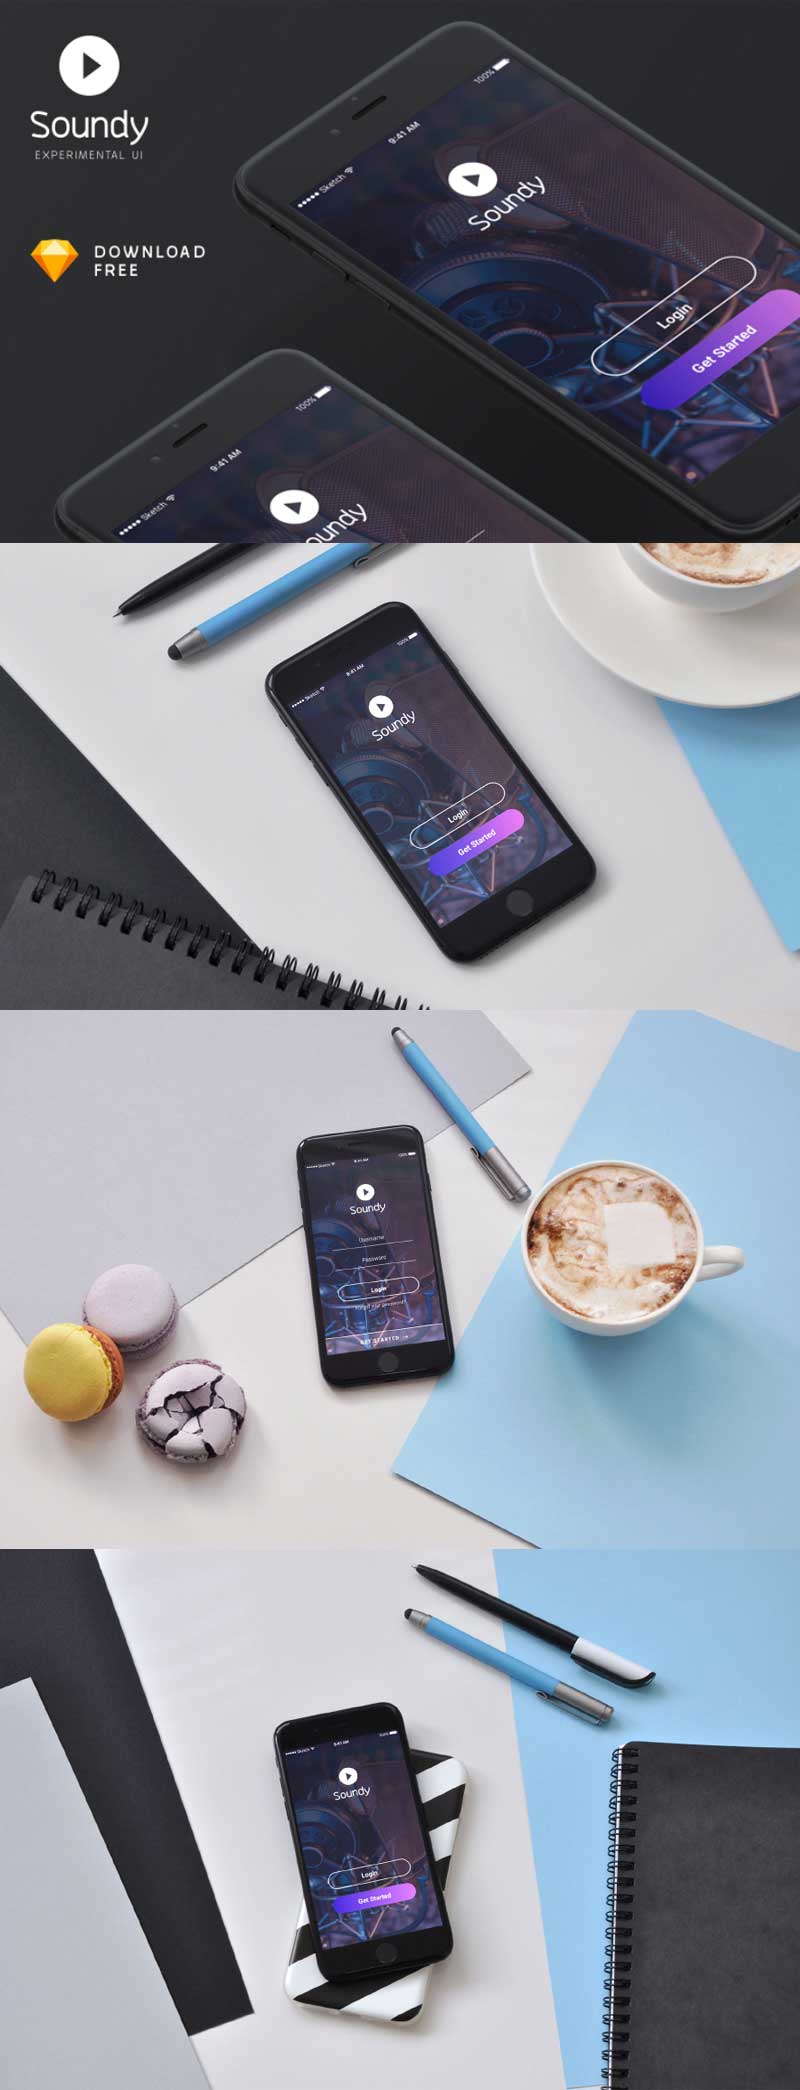 Soundy-Free-Mobile-App-UI-Kit